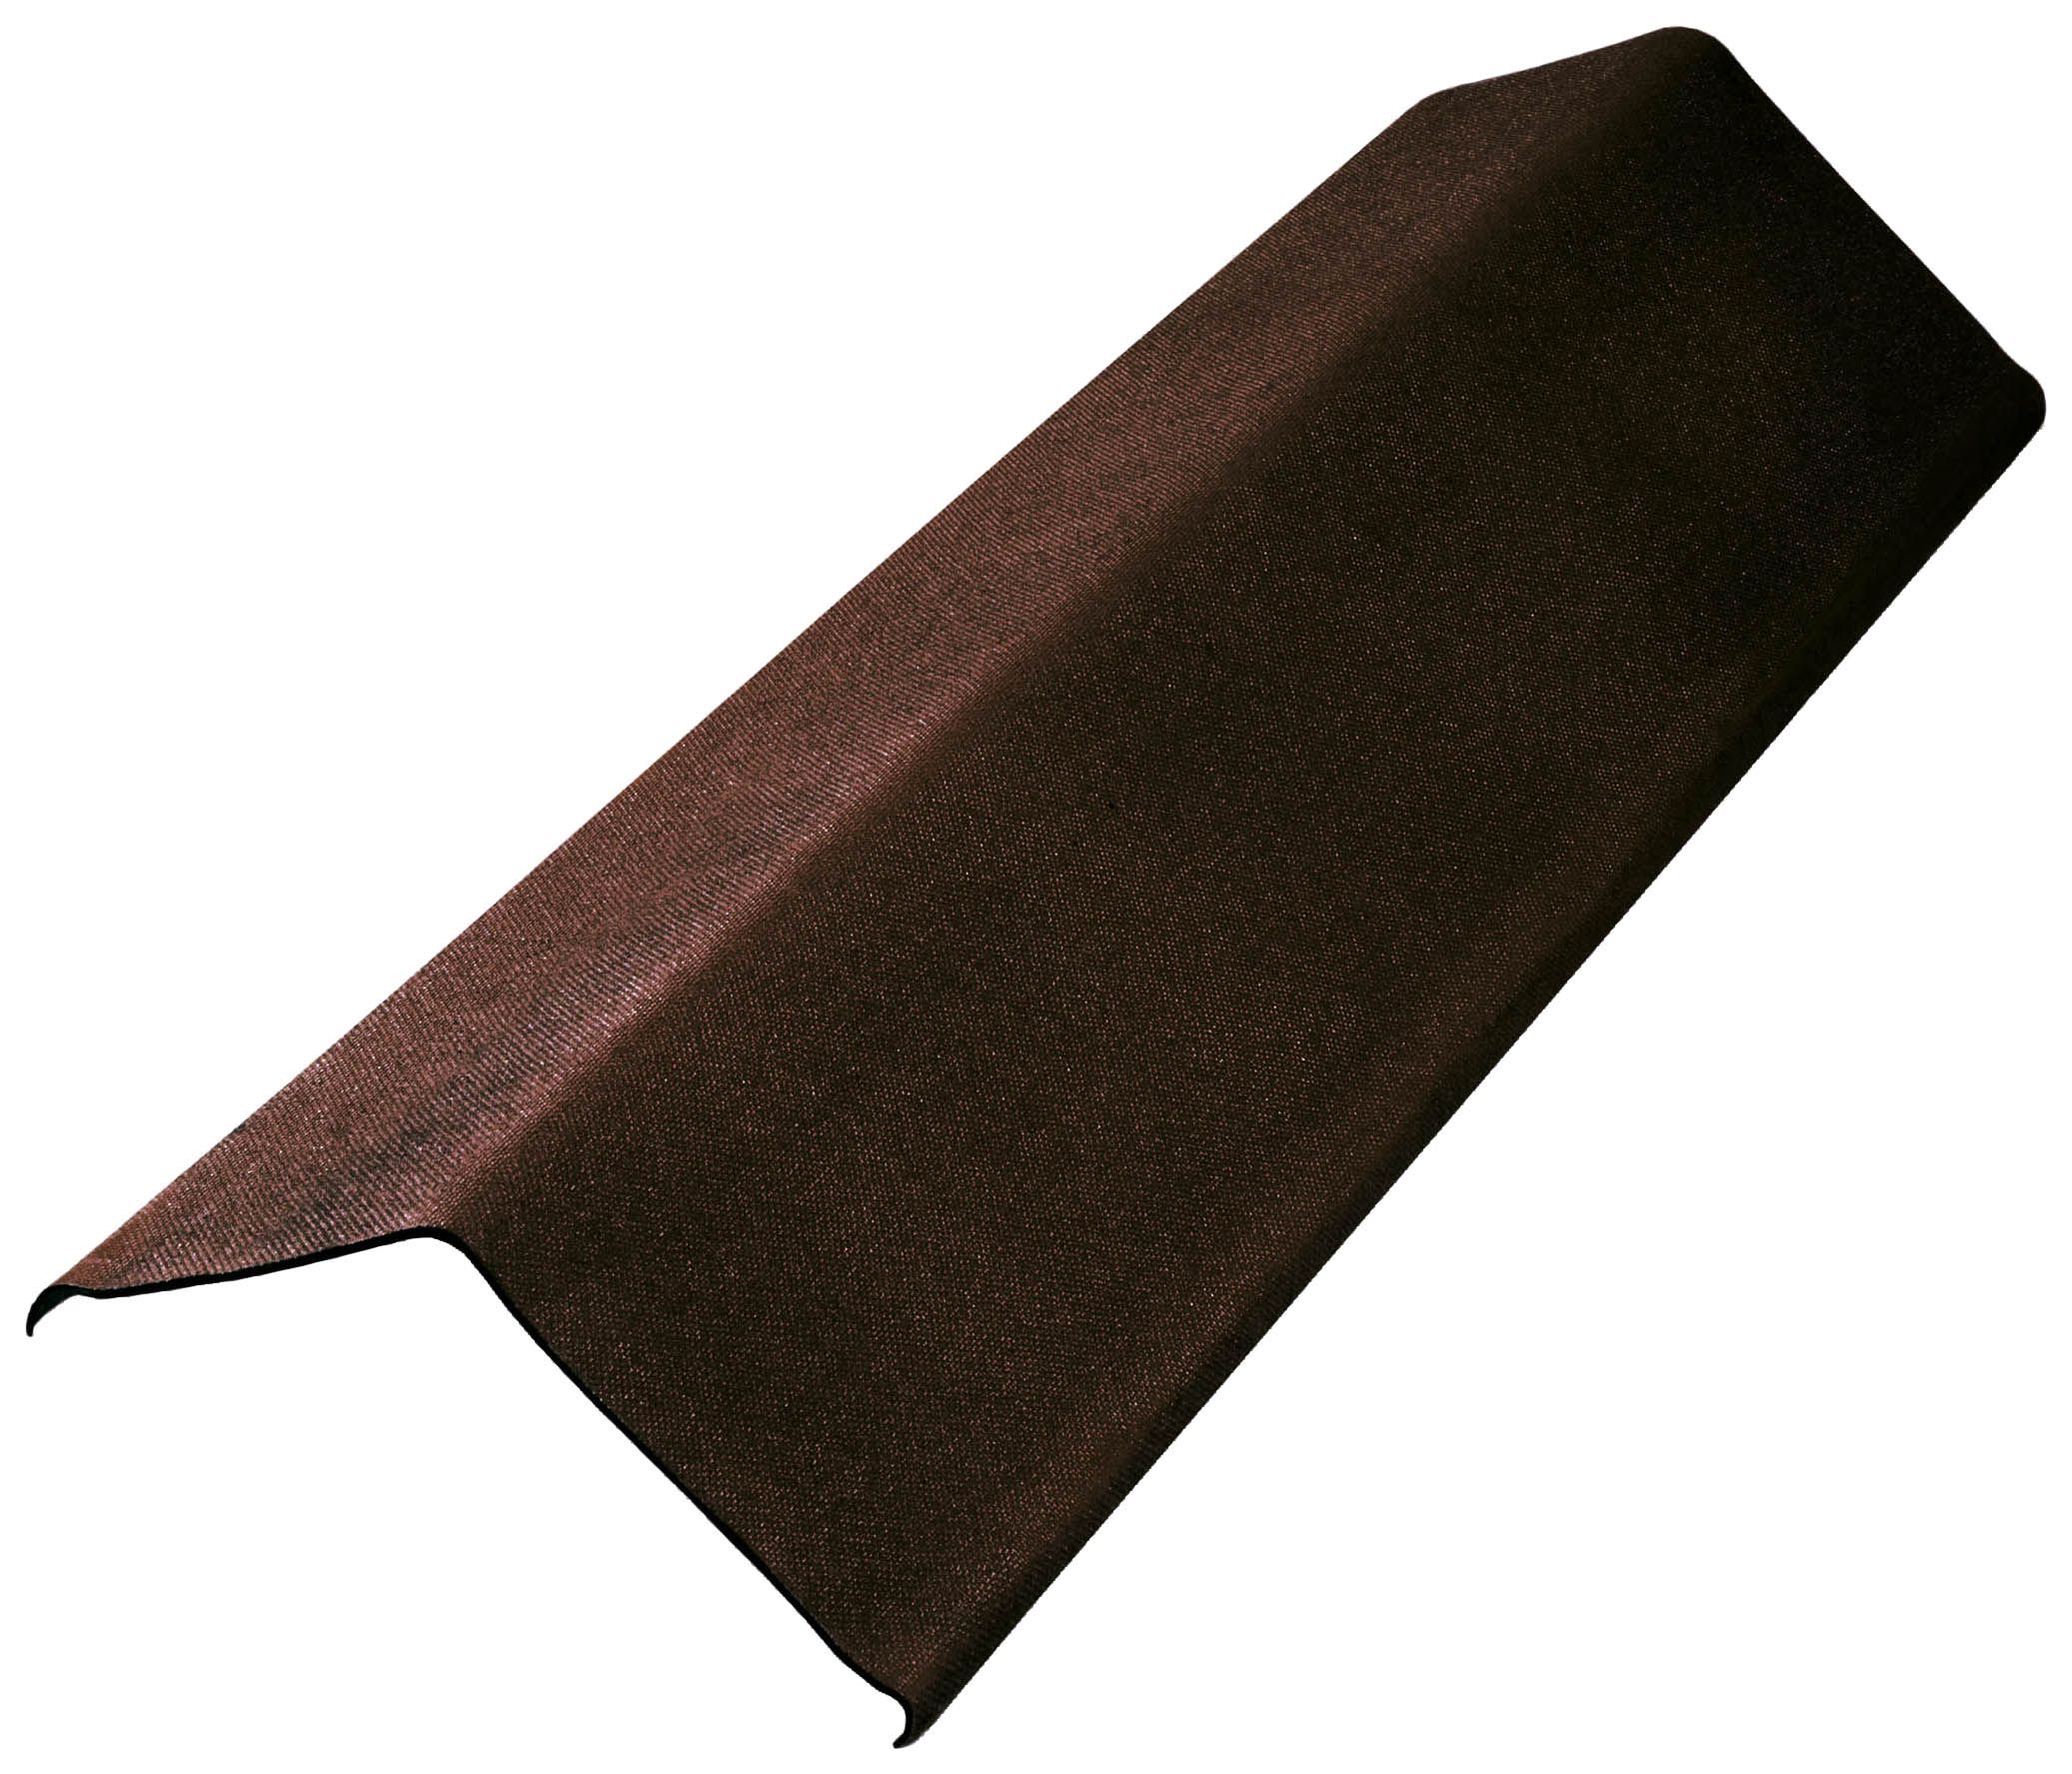 Image of Onduine Bitumen Verge Brown - 405mm x 1000mm